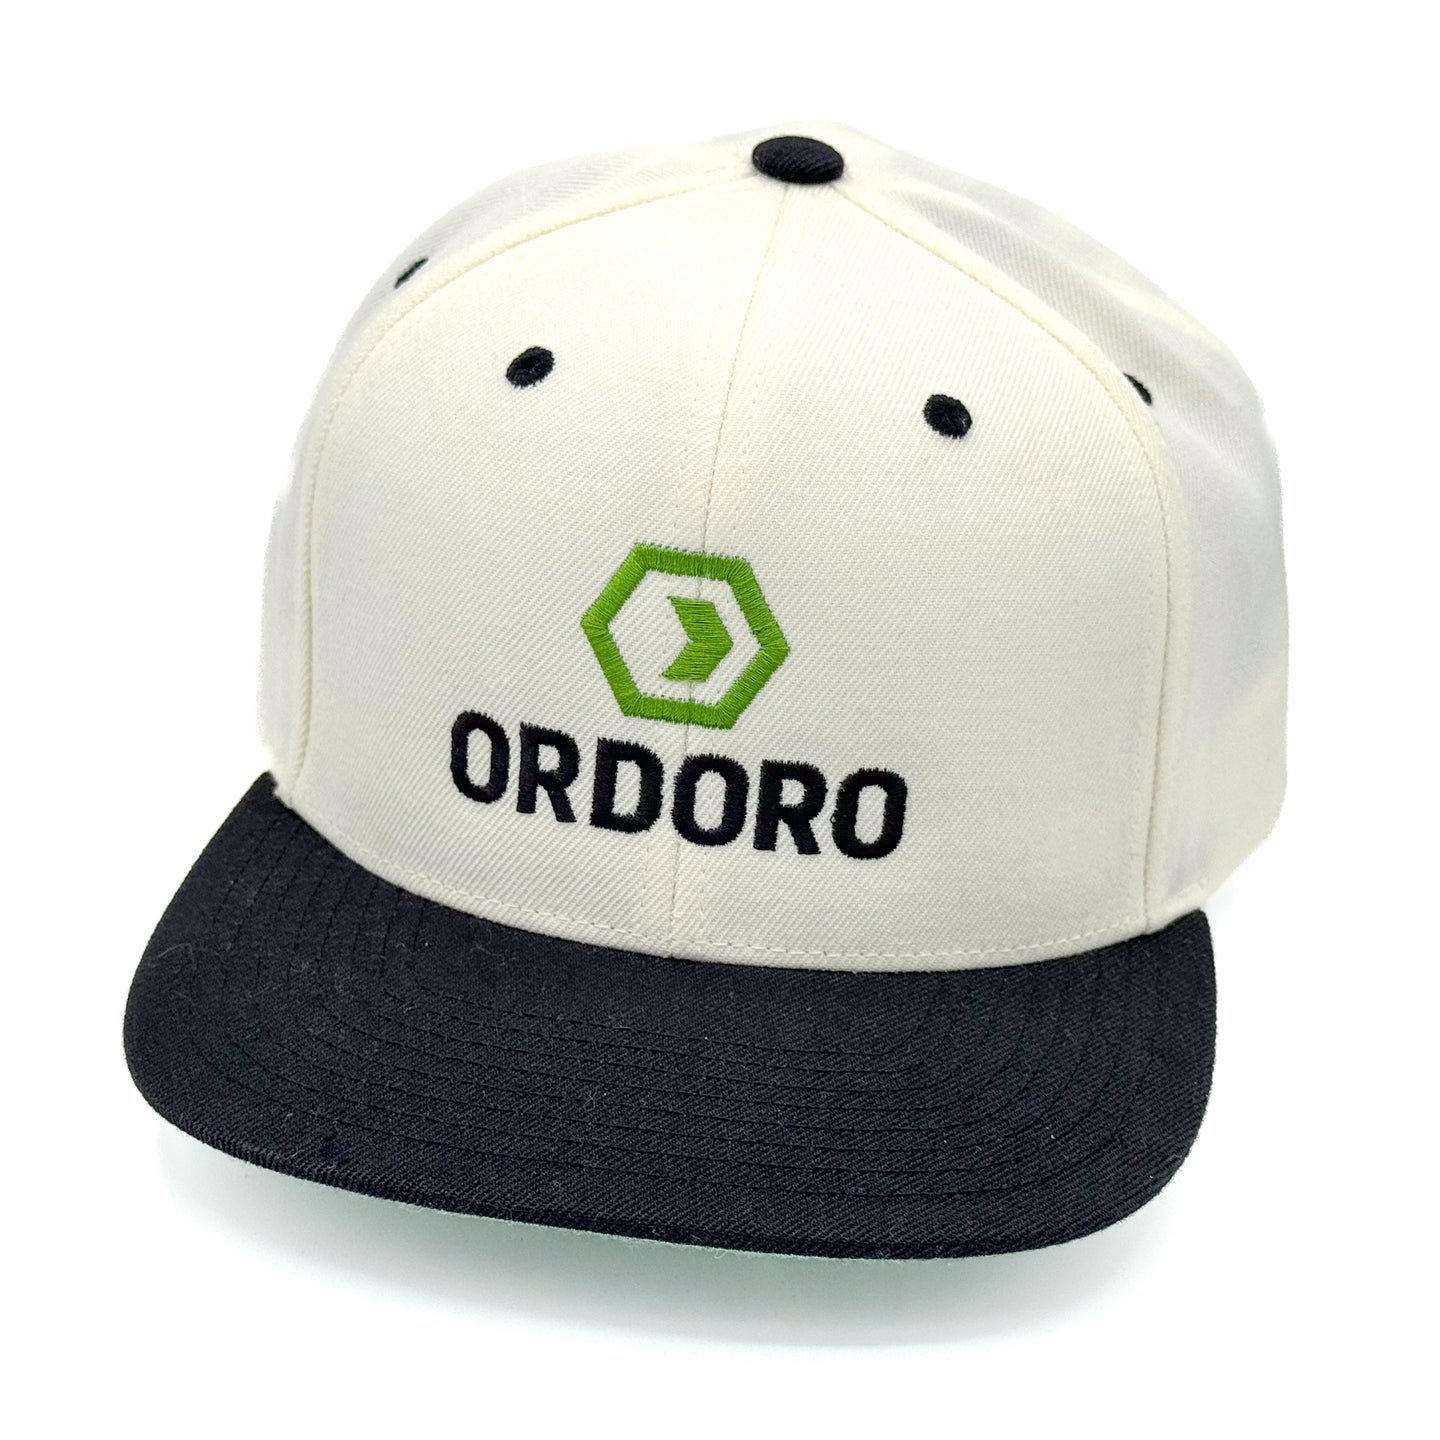 Ordoro Snapback Hat - Black & Green